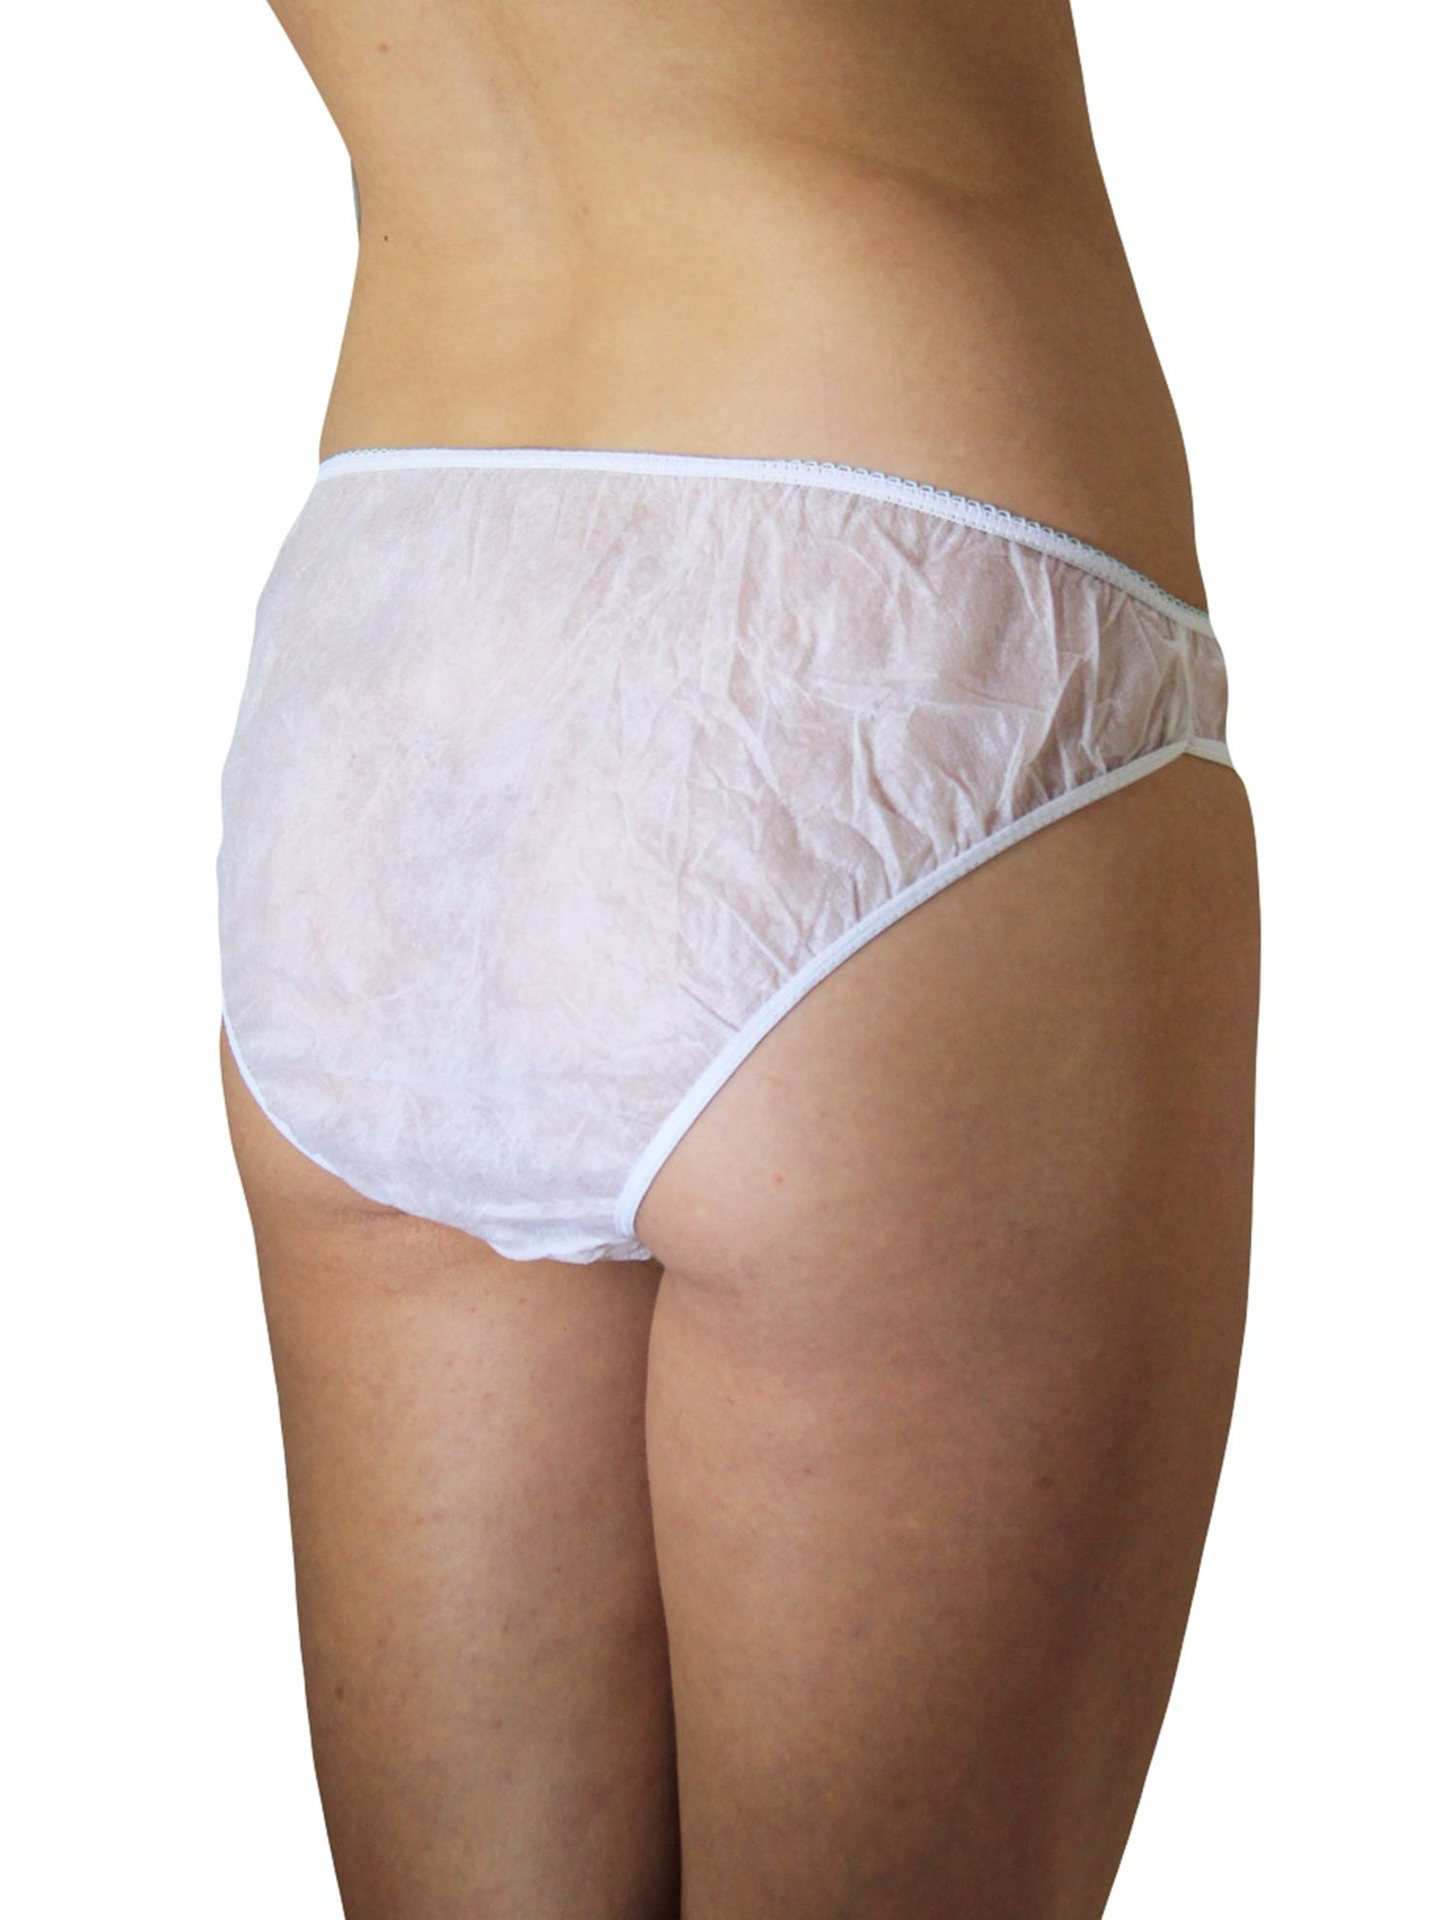 Women's Disposable Panties 10-Pack. Men Compression Shirts